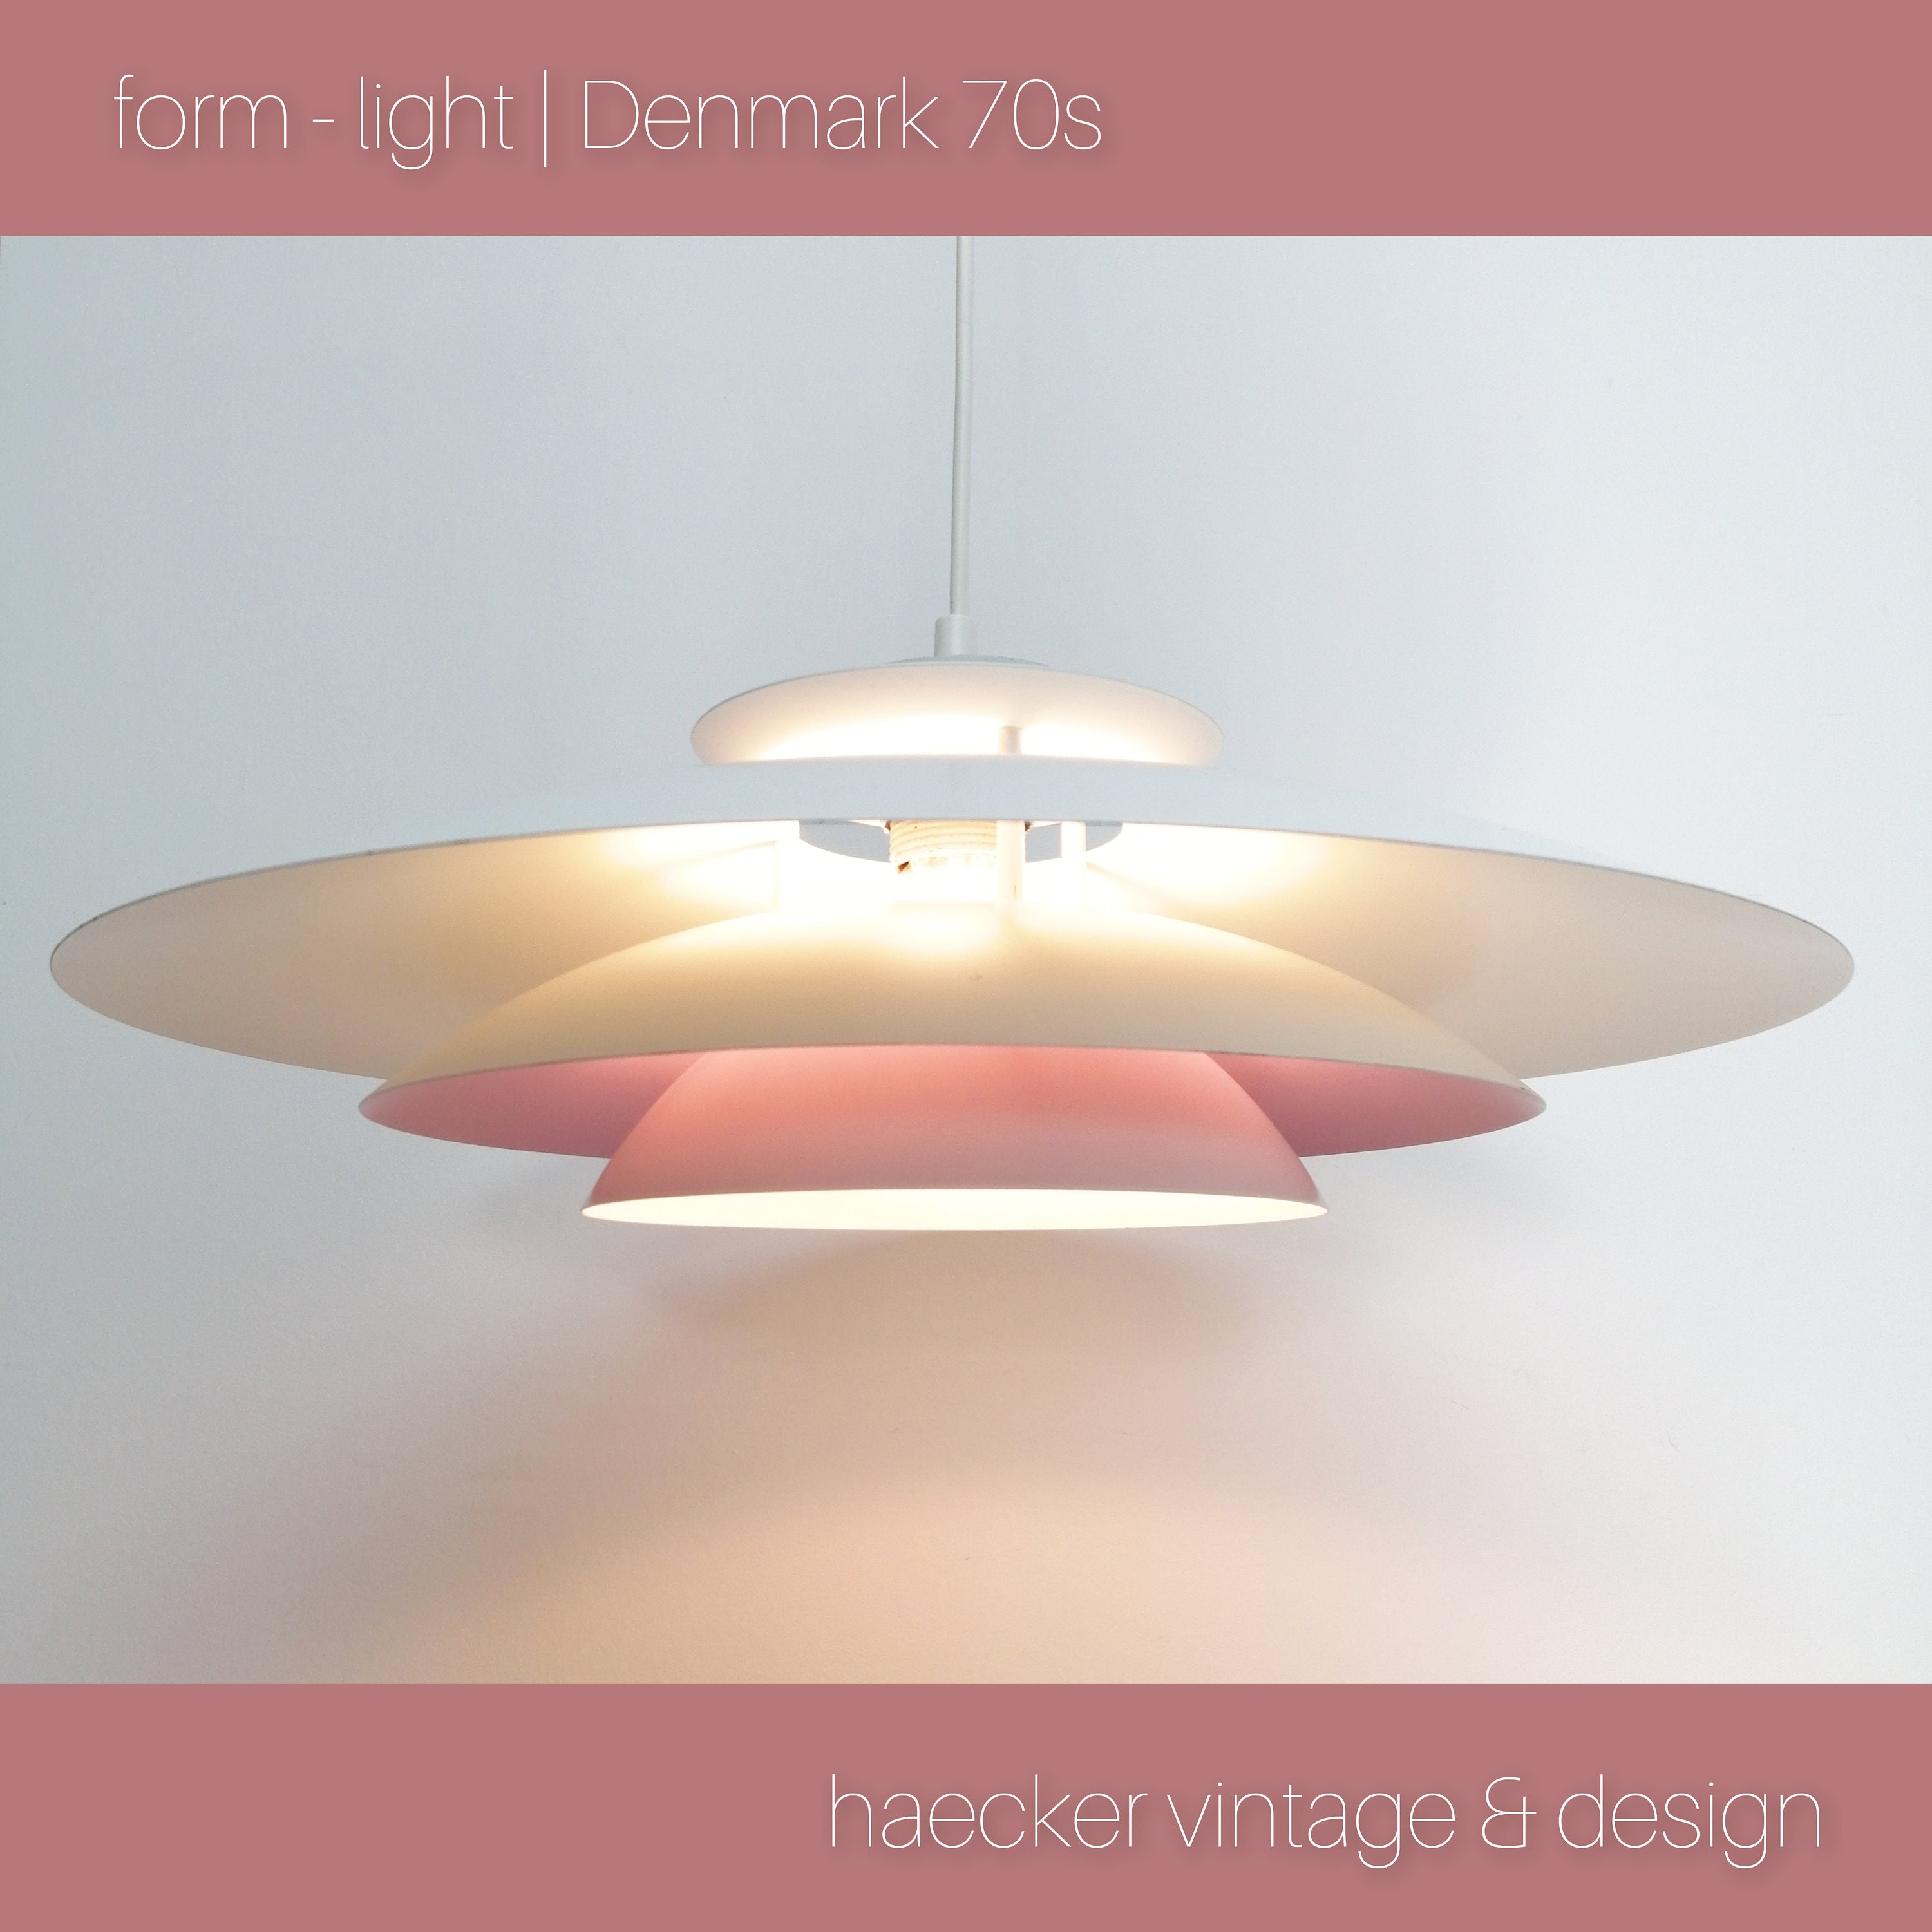 Beautiful Lamp Light Denmark - Etsy